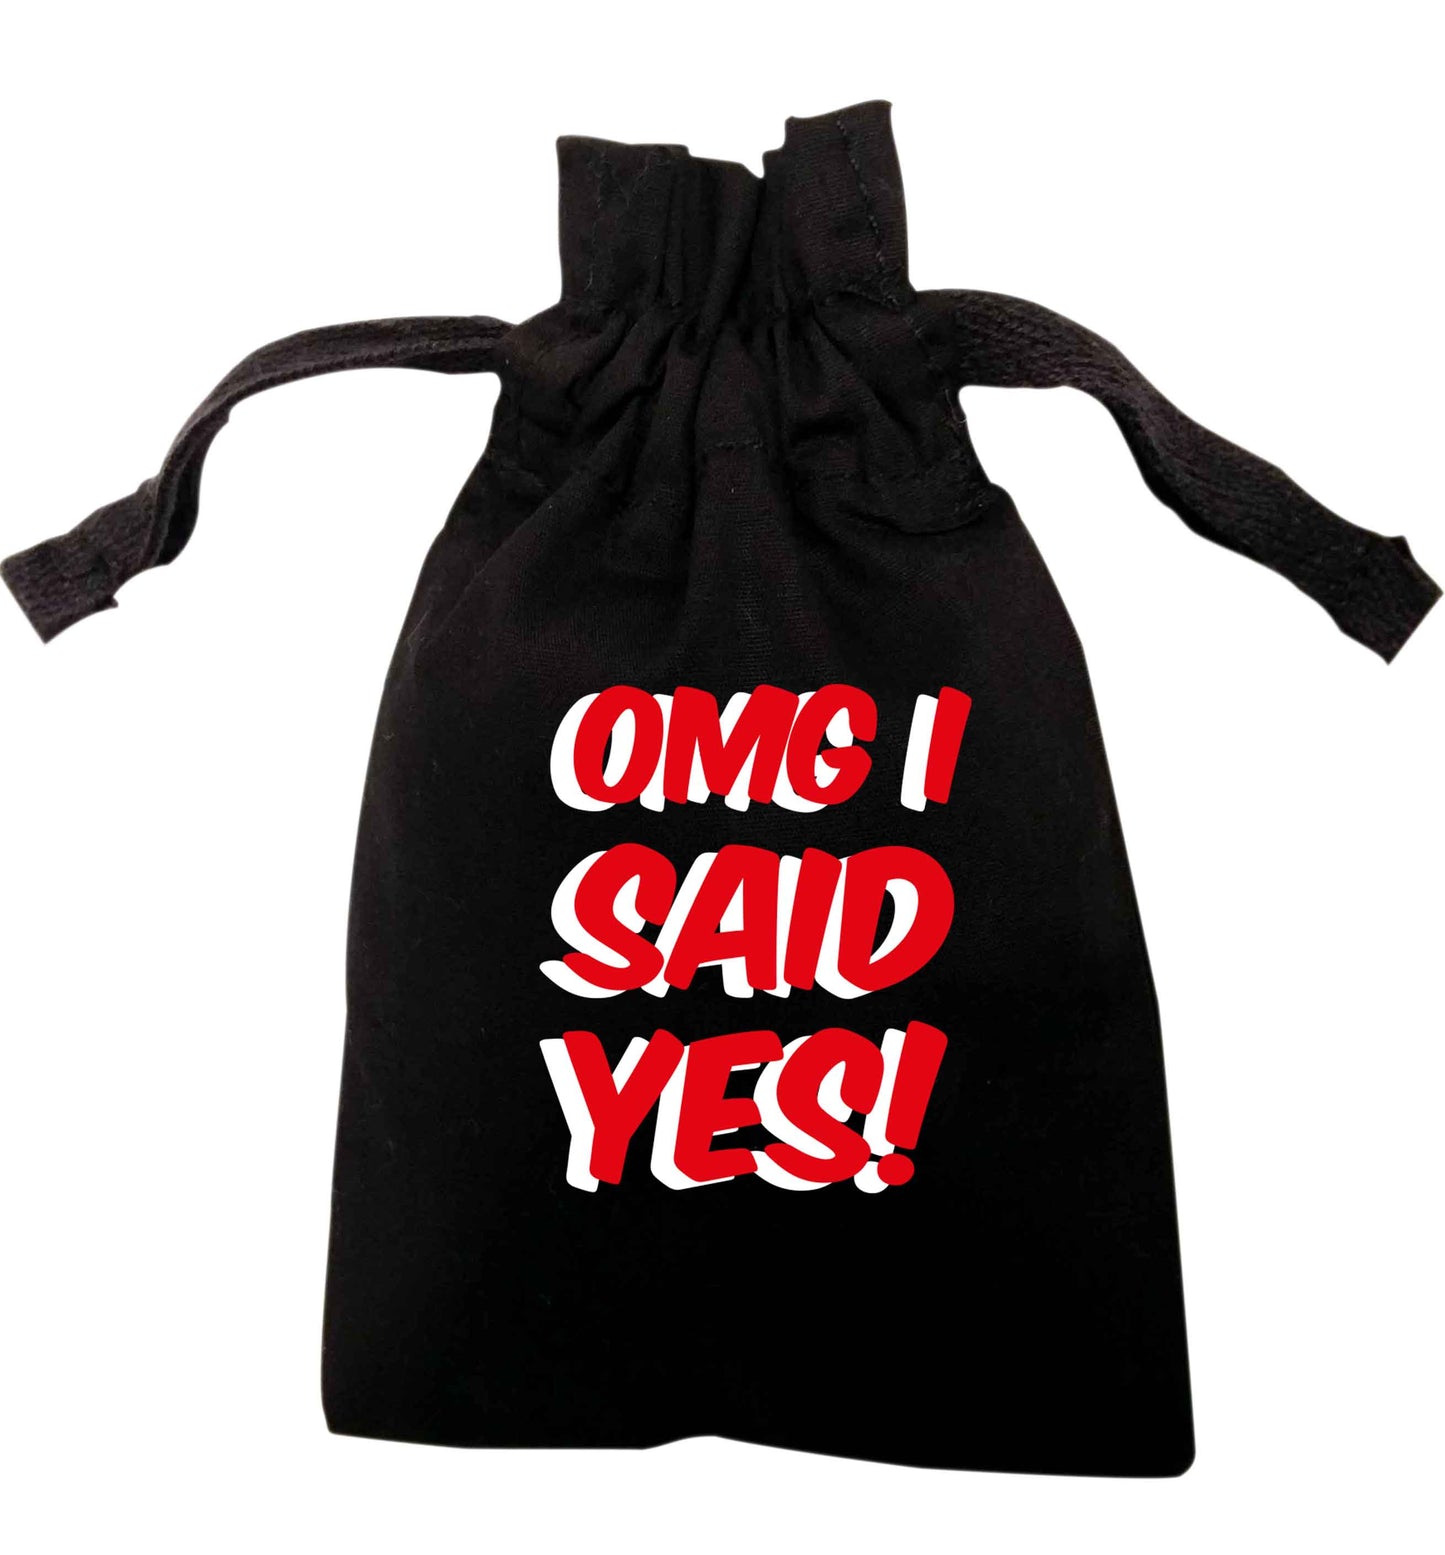 Omg I said yes | XS - L | Pouch / Drawstring bag / Sack | Organic Cotton | Bulk discounts available!